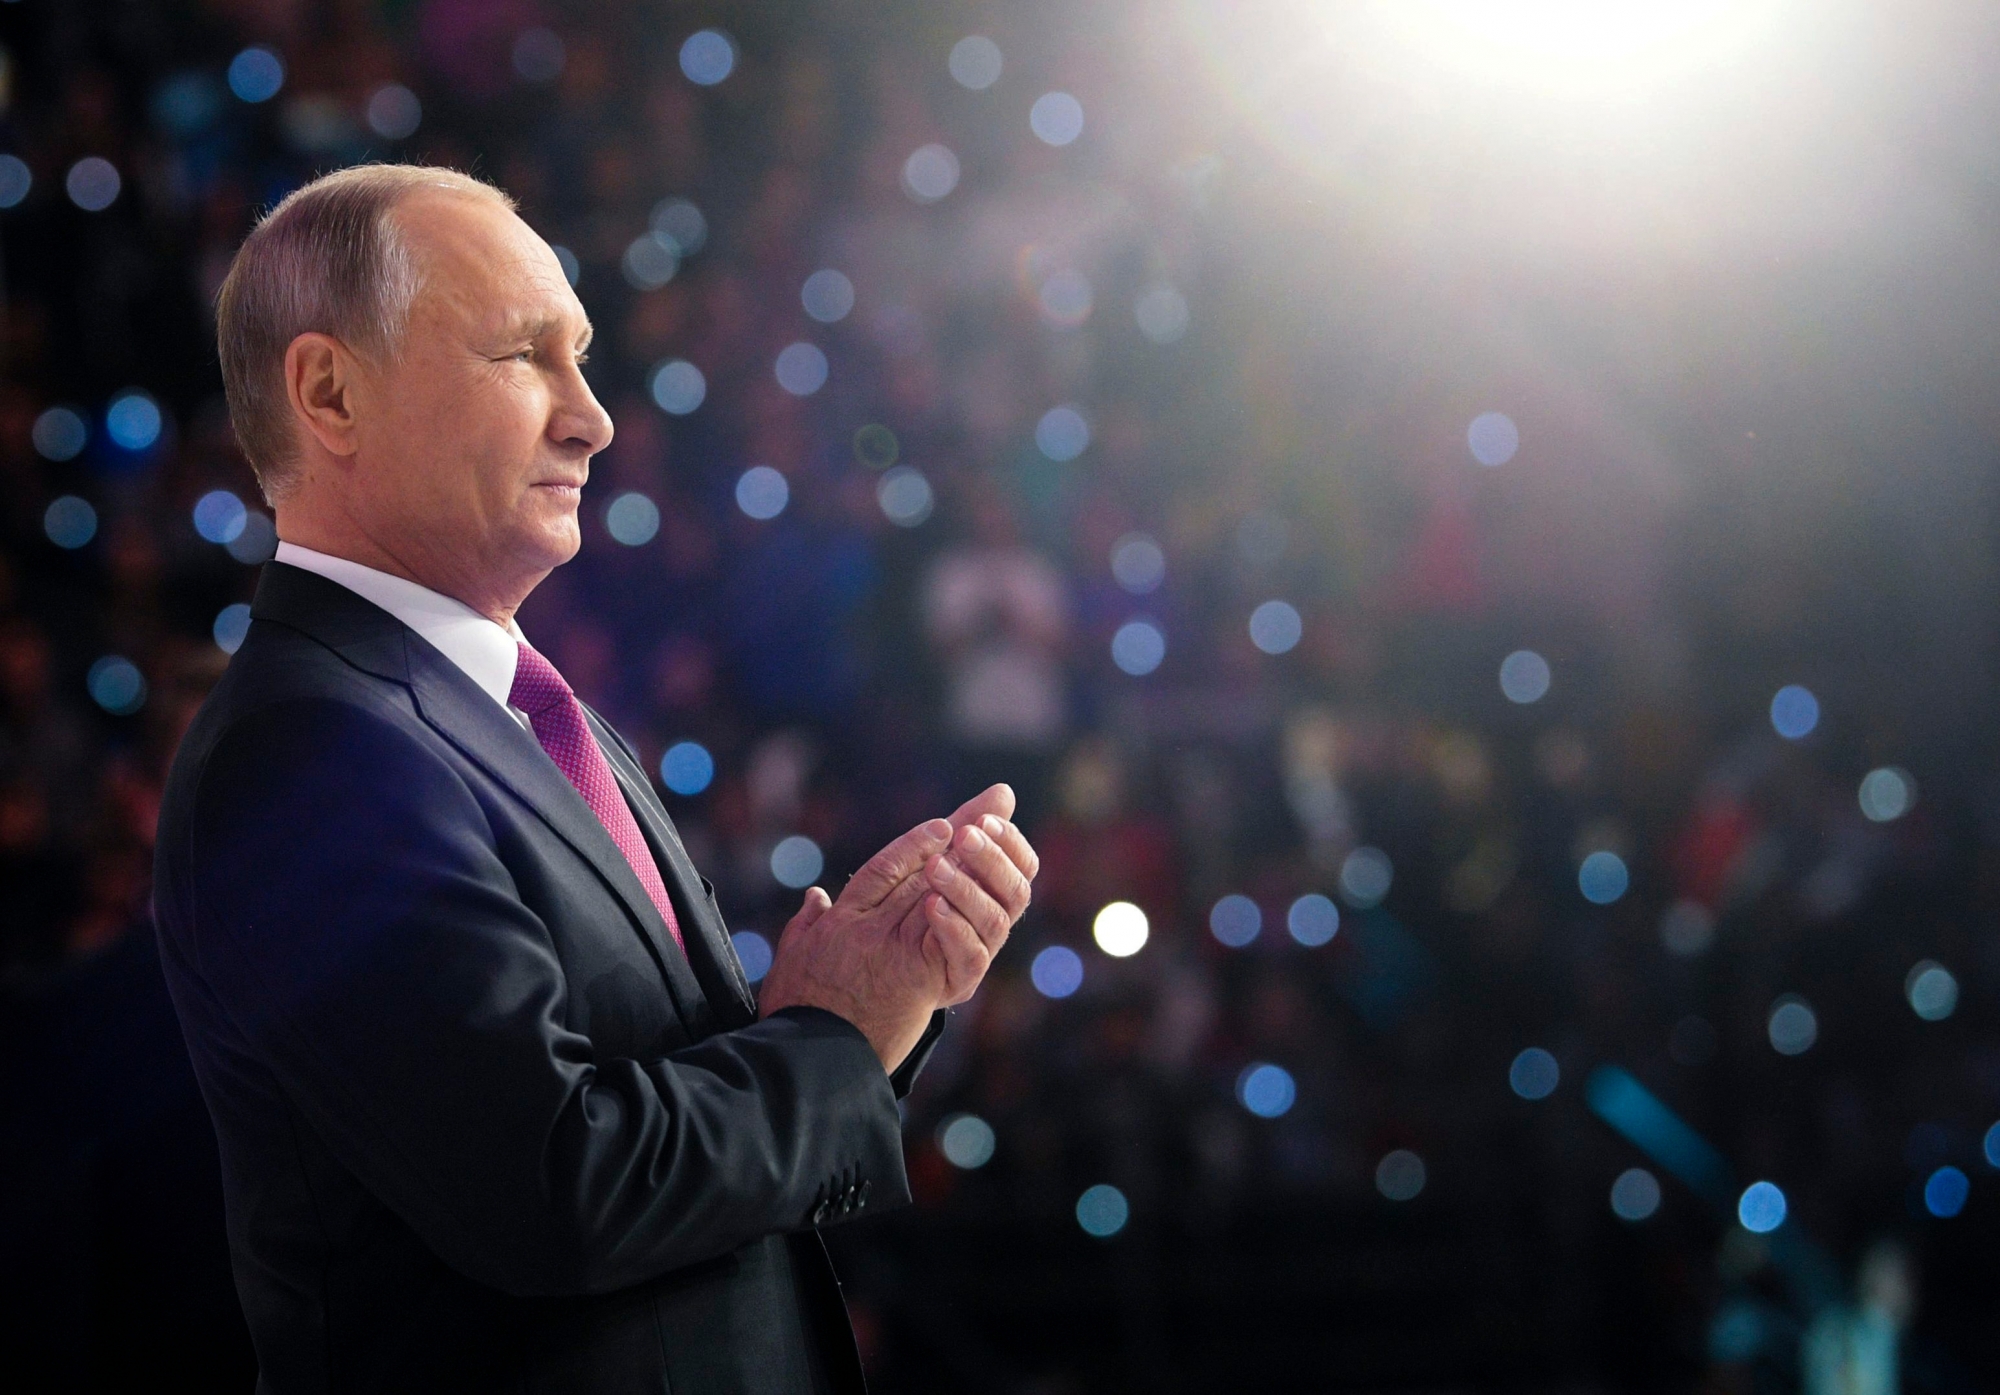 ARCHIVBILD --- ZU DEN PRAESIDENTSCHAFTSWAHLEN IN RUSSLAND AM SONNTAG, 18. MAERZ 2018, STELLEN WIR IHNEN FOLGENDES BILDMATERIAL ZUR VERFUEGUNG --- Russian President Vladimir Putin attends the annual Volunteer of Russia 2017 award ceremony at the Megasport Sport Palace in Moscow, Russia, Wednesday, Dec. 6, 2017. Putin has moved an inch closer to announcing his intention to seek re-election in the next March's vote, saying he would weigh the move based on public support.(Alexei Druzhinin, Sputnik, Kremlin Pool Photo via AP) RUSSLAND WAHLEN PRAESIDENT